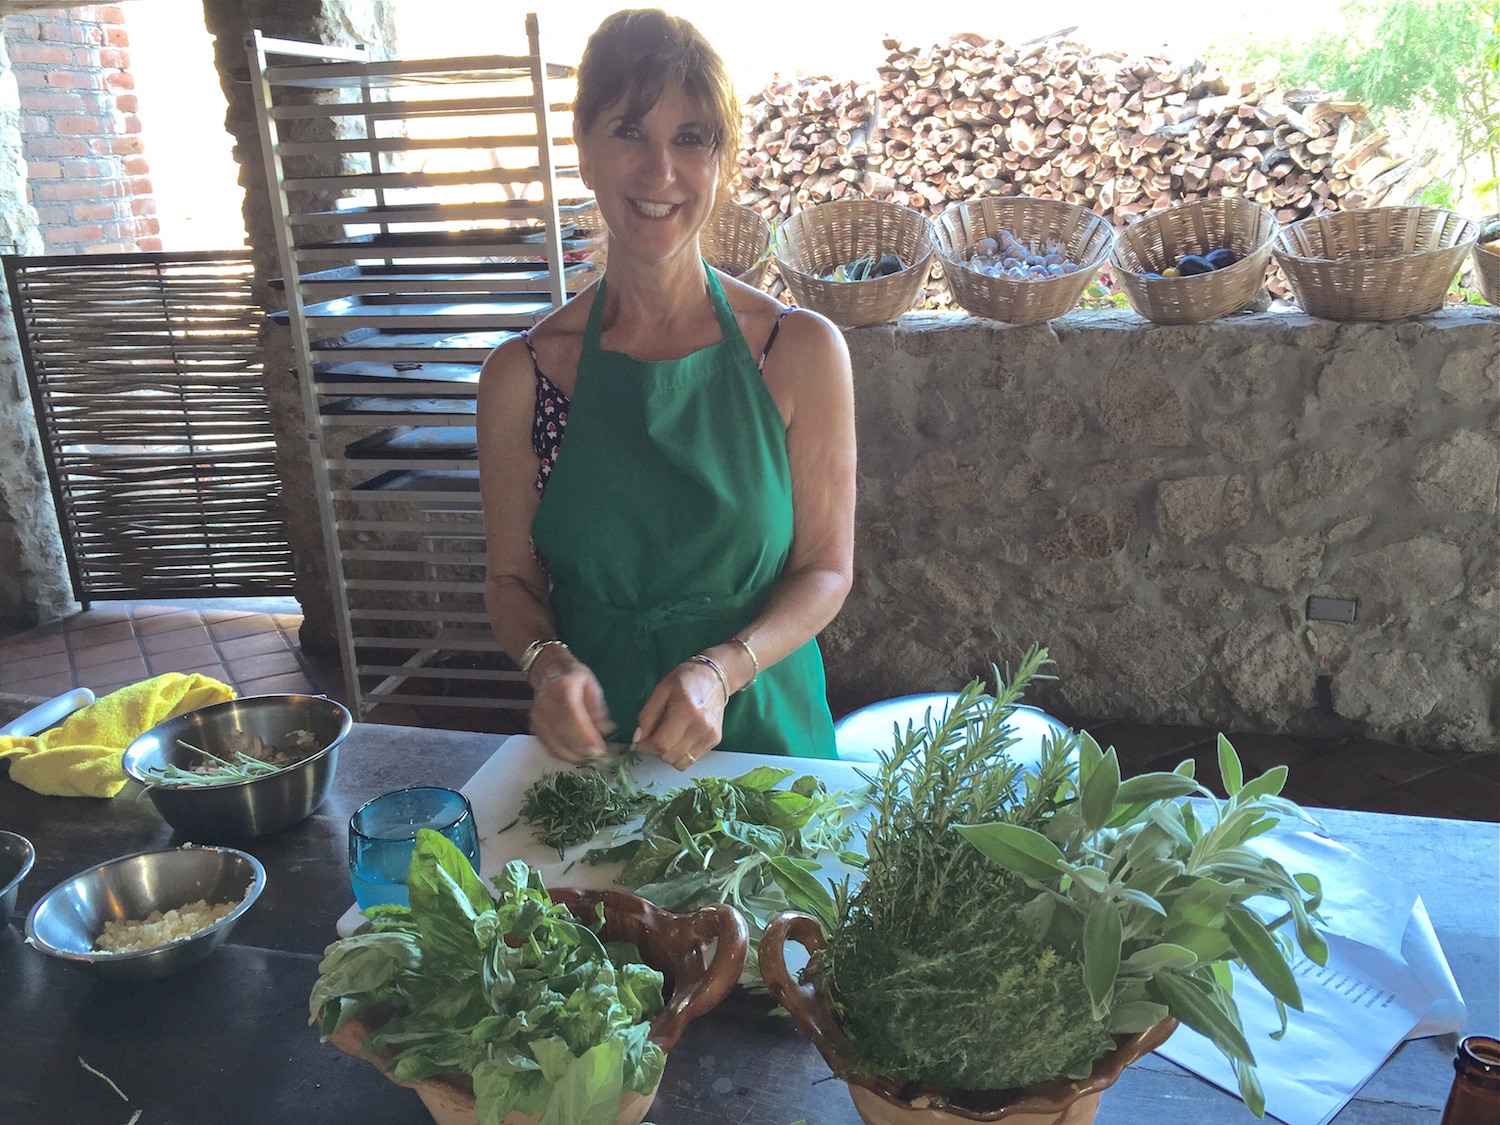 Lajollacooks4u Visit Organic Farm and Restaurant In San Jose del Cabo